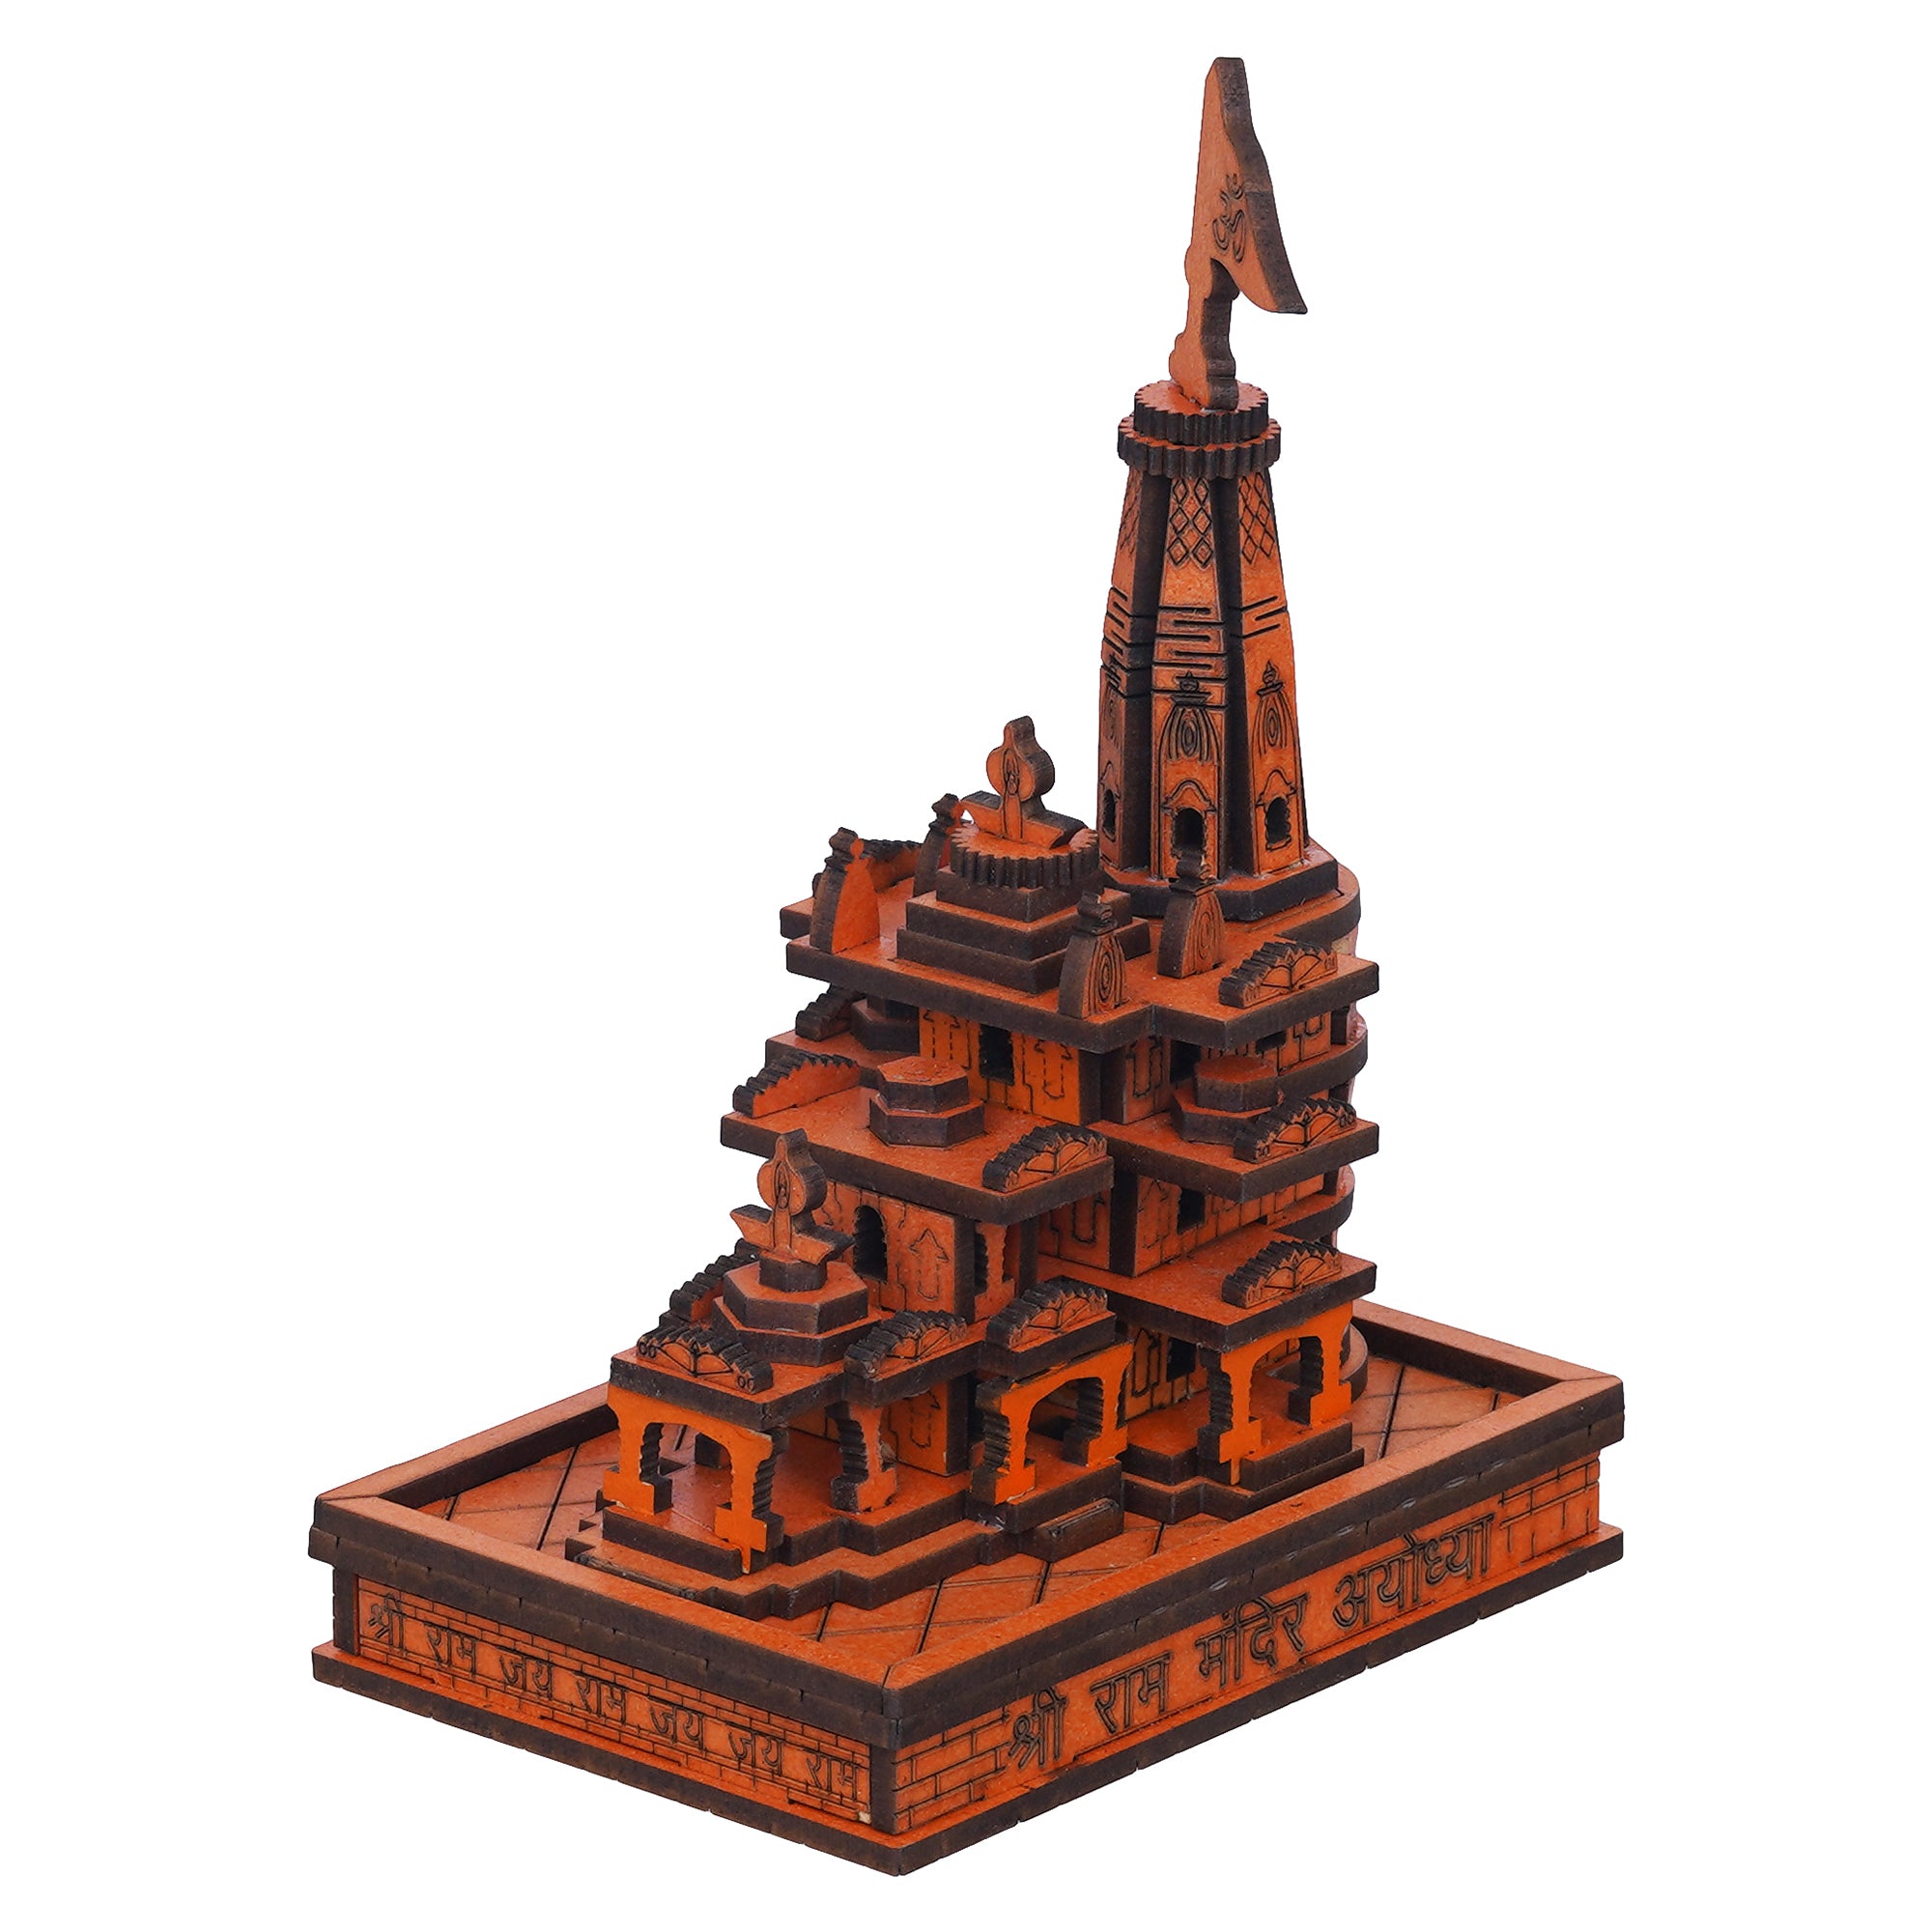 eCraftIndia Shri Ram Mandir Ayodhya Model - Wooden MDF Craftsmanship Authentic Designer Temple - Ideal for Home Temple, Decor, and Spiritual Gifting (Orange, Brown) 6